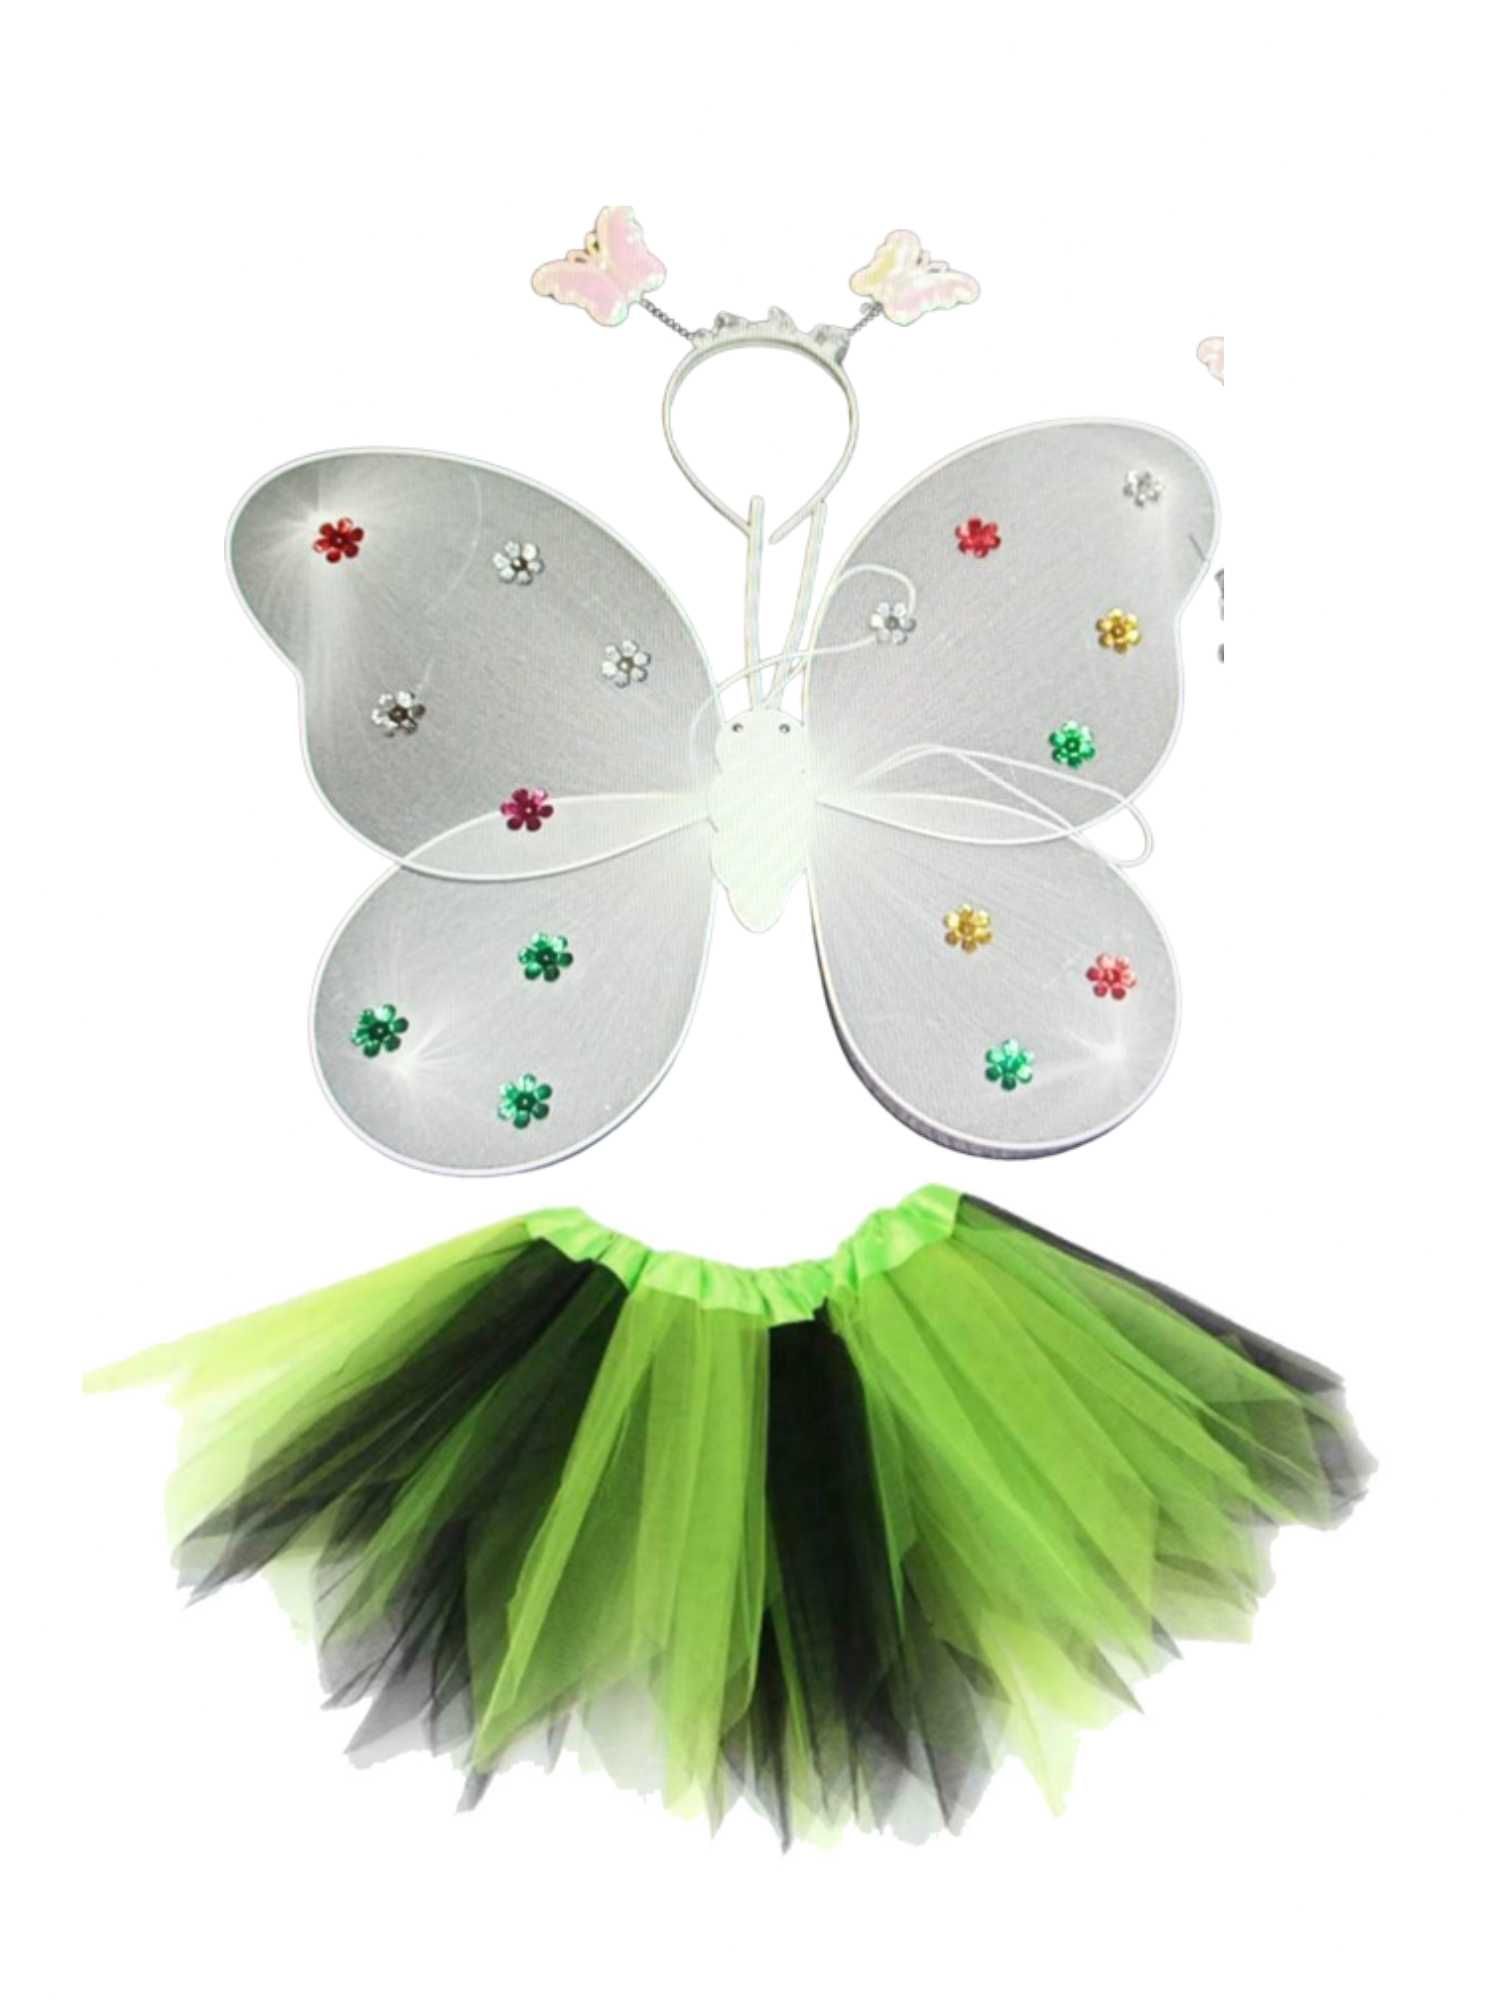 Strój kostium dla motylka wiosennego